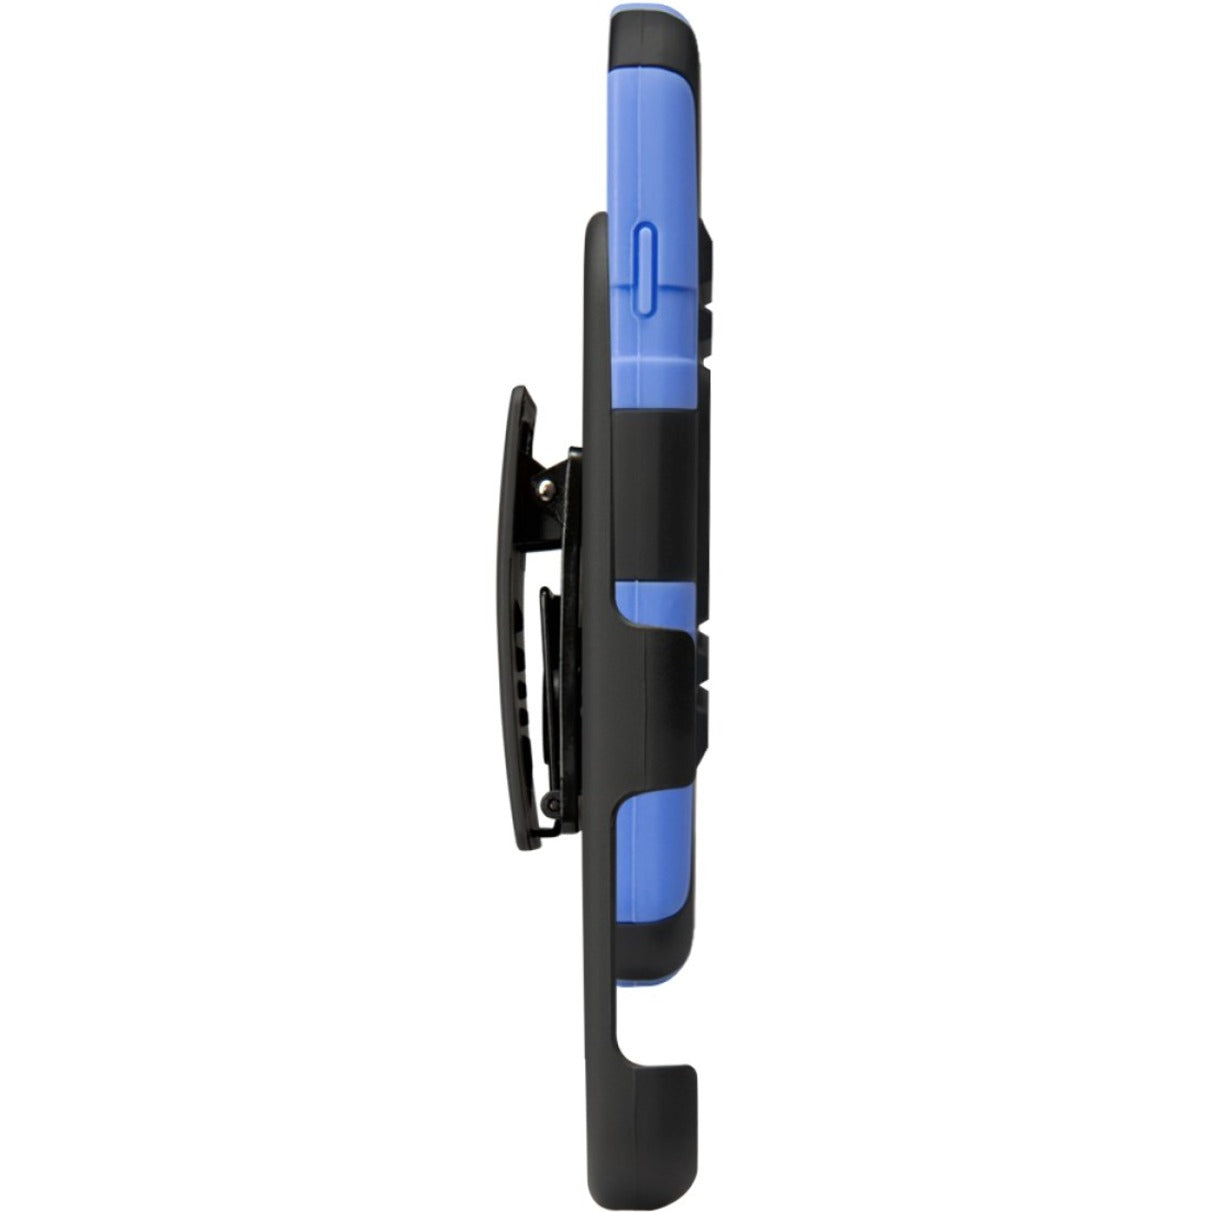 i-Blason Prime Carrying Case (Holster) Smartphone - Blue